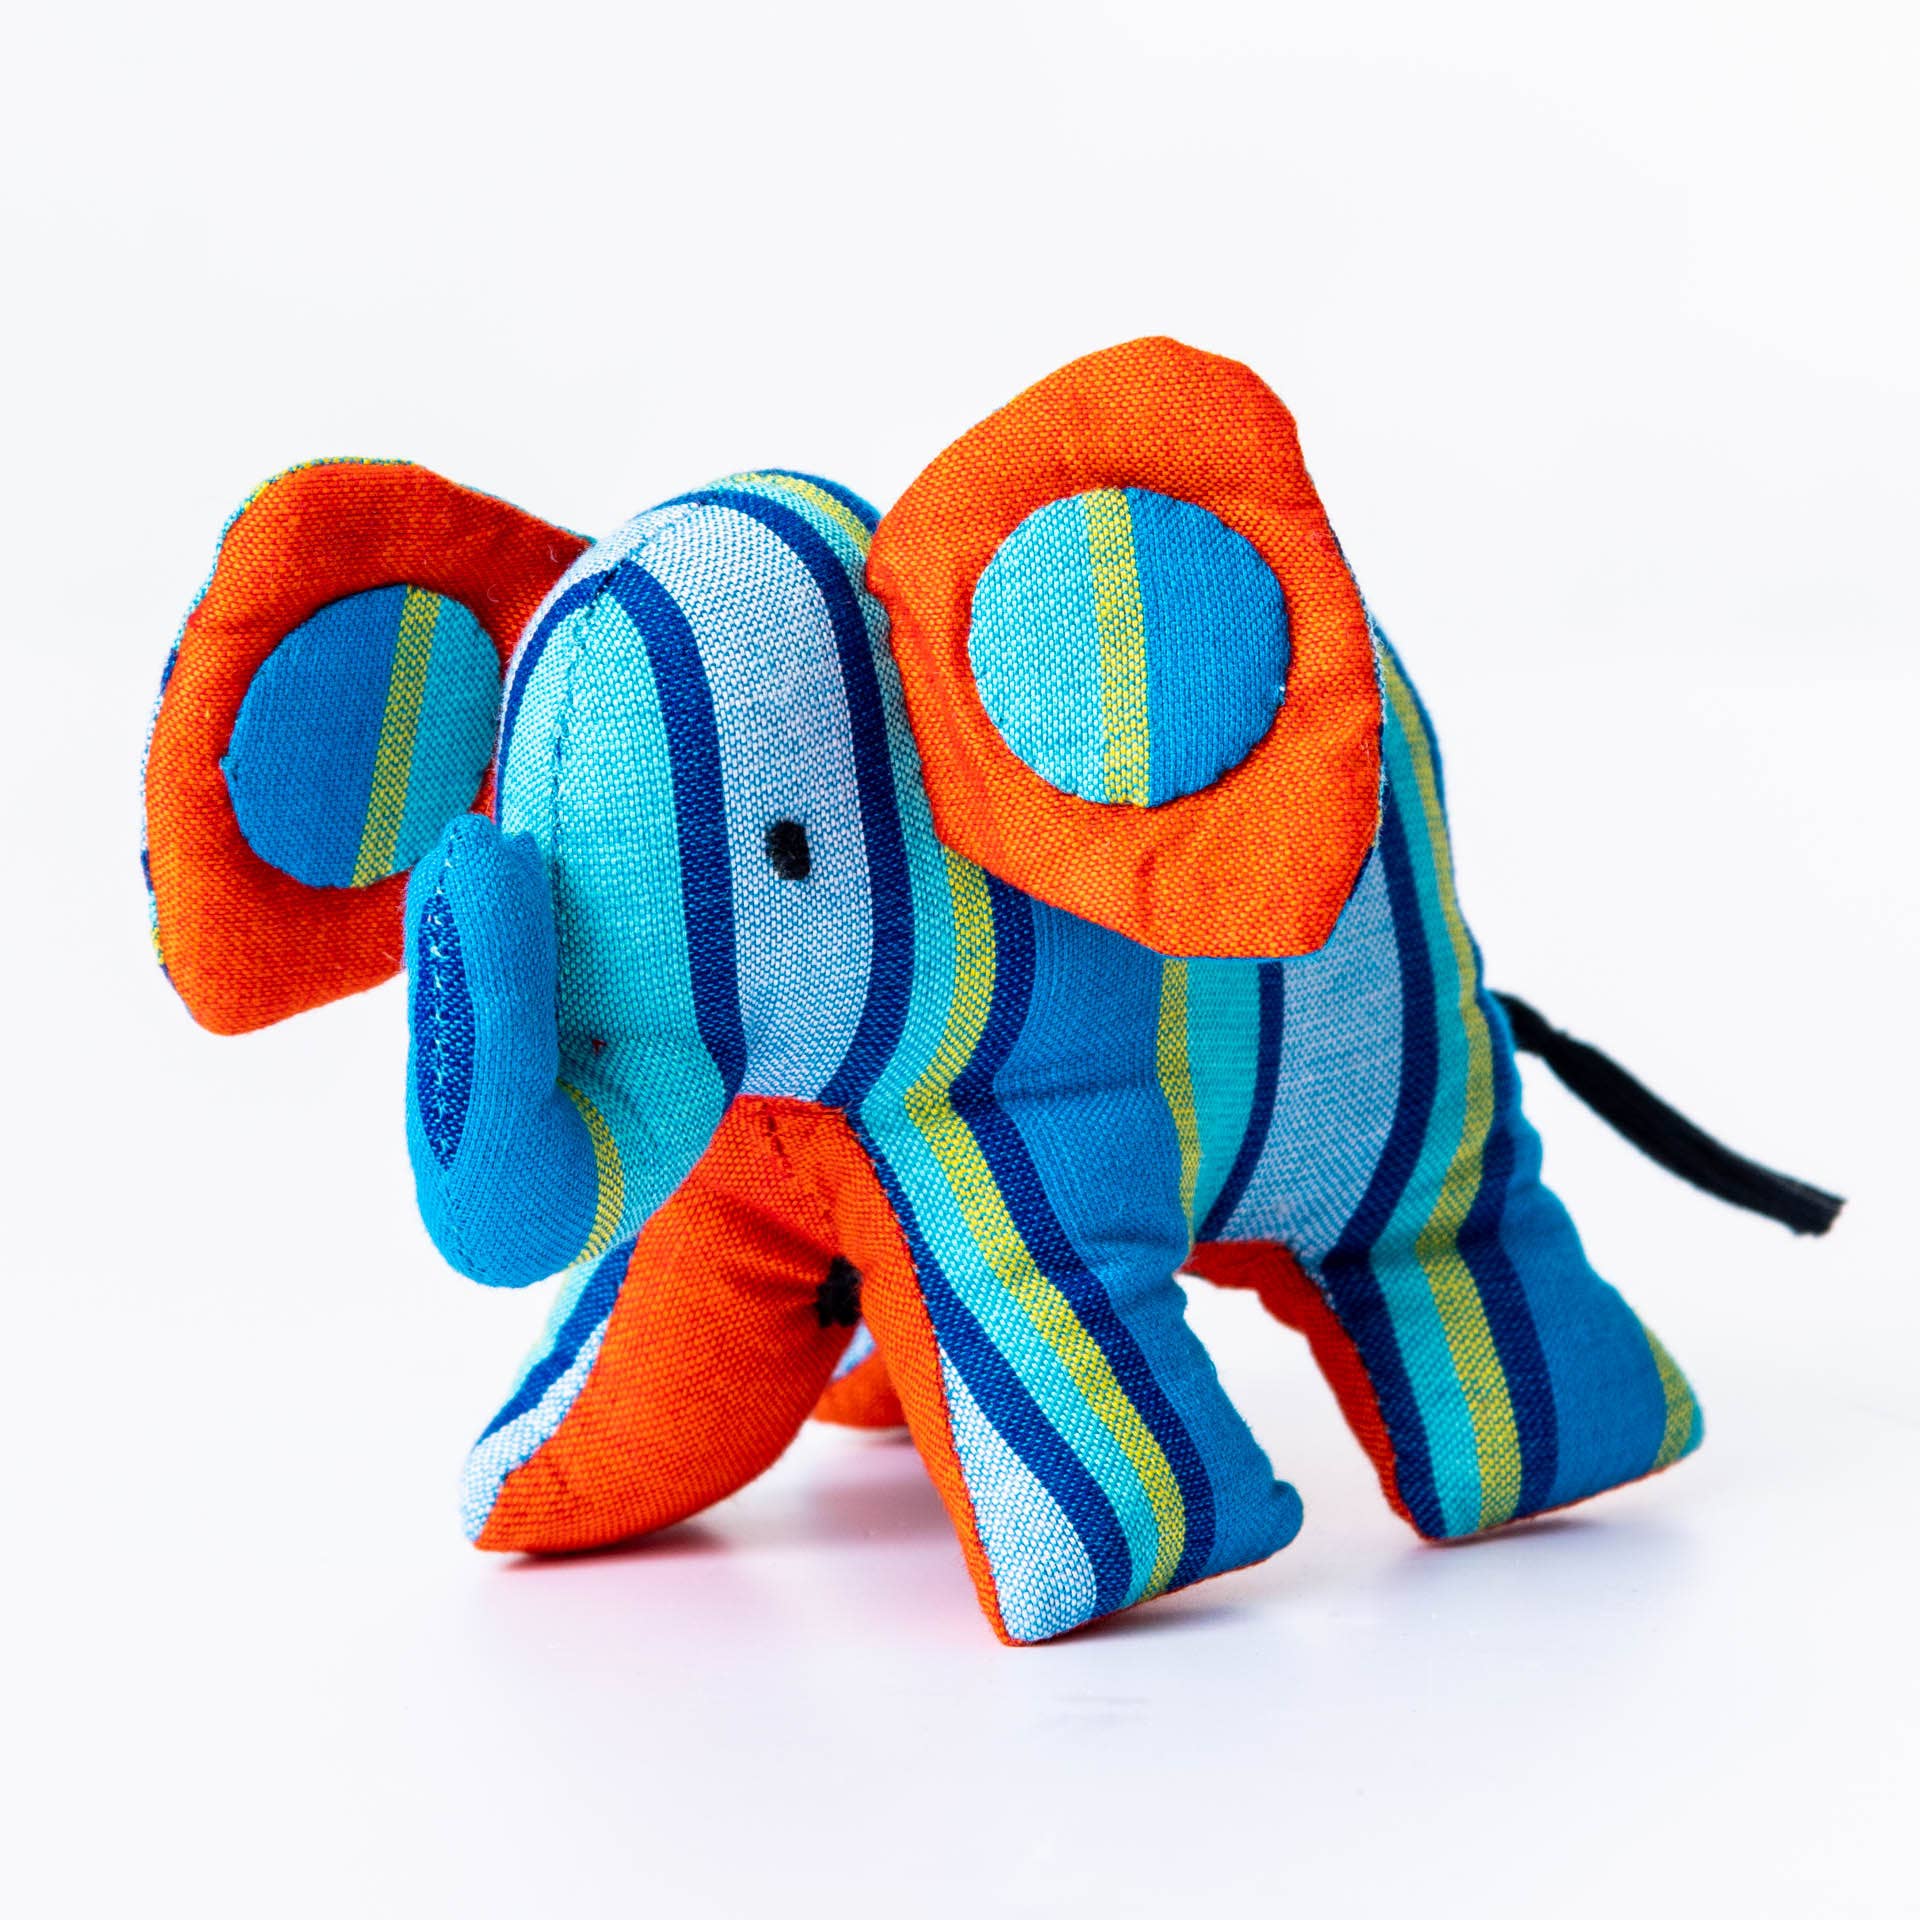 blue, green, and orange elephant stuffed animal